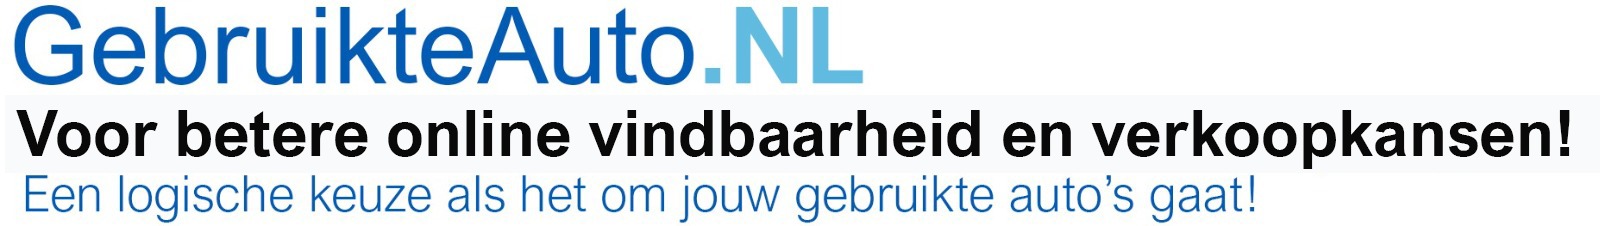 GebruikteAuto.nl logo